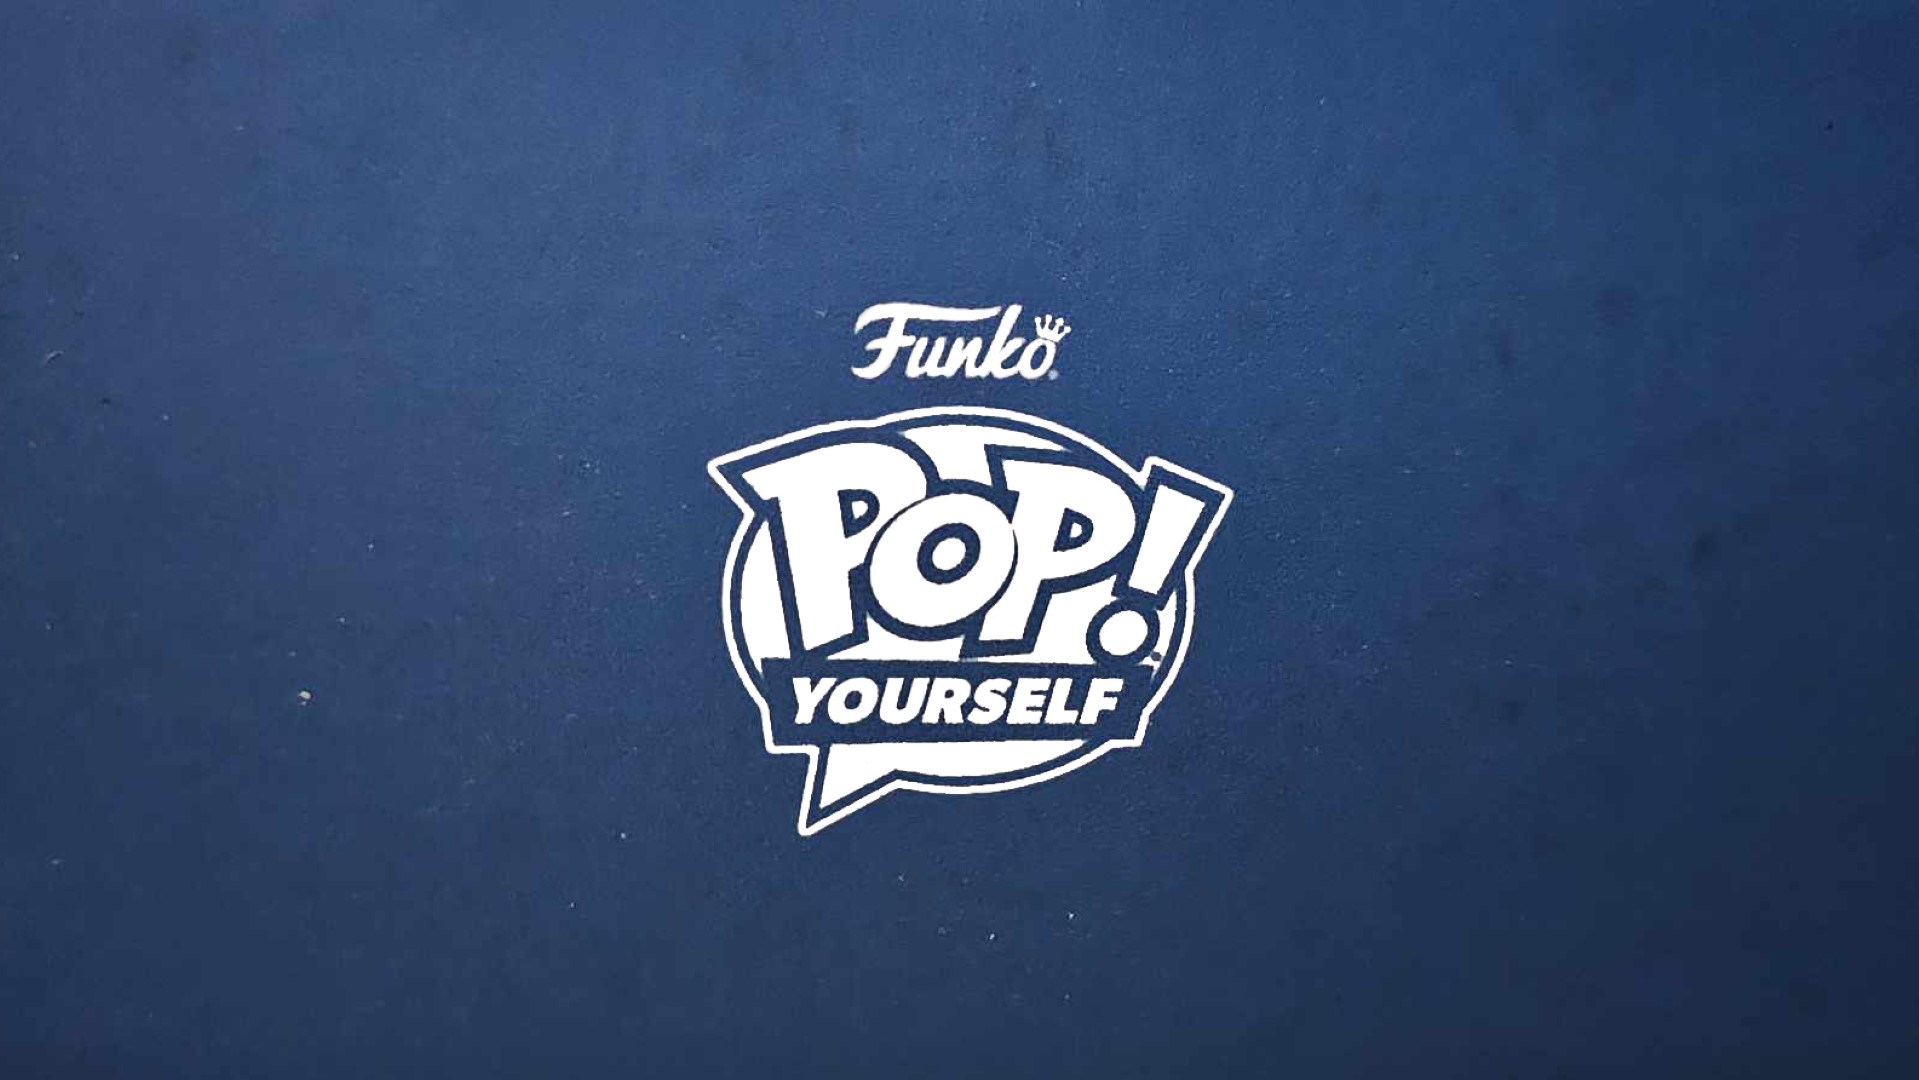 Funko Pop! Yourself